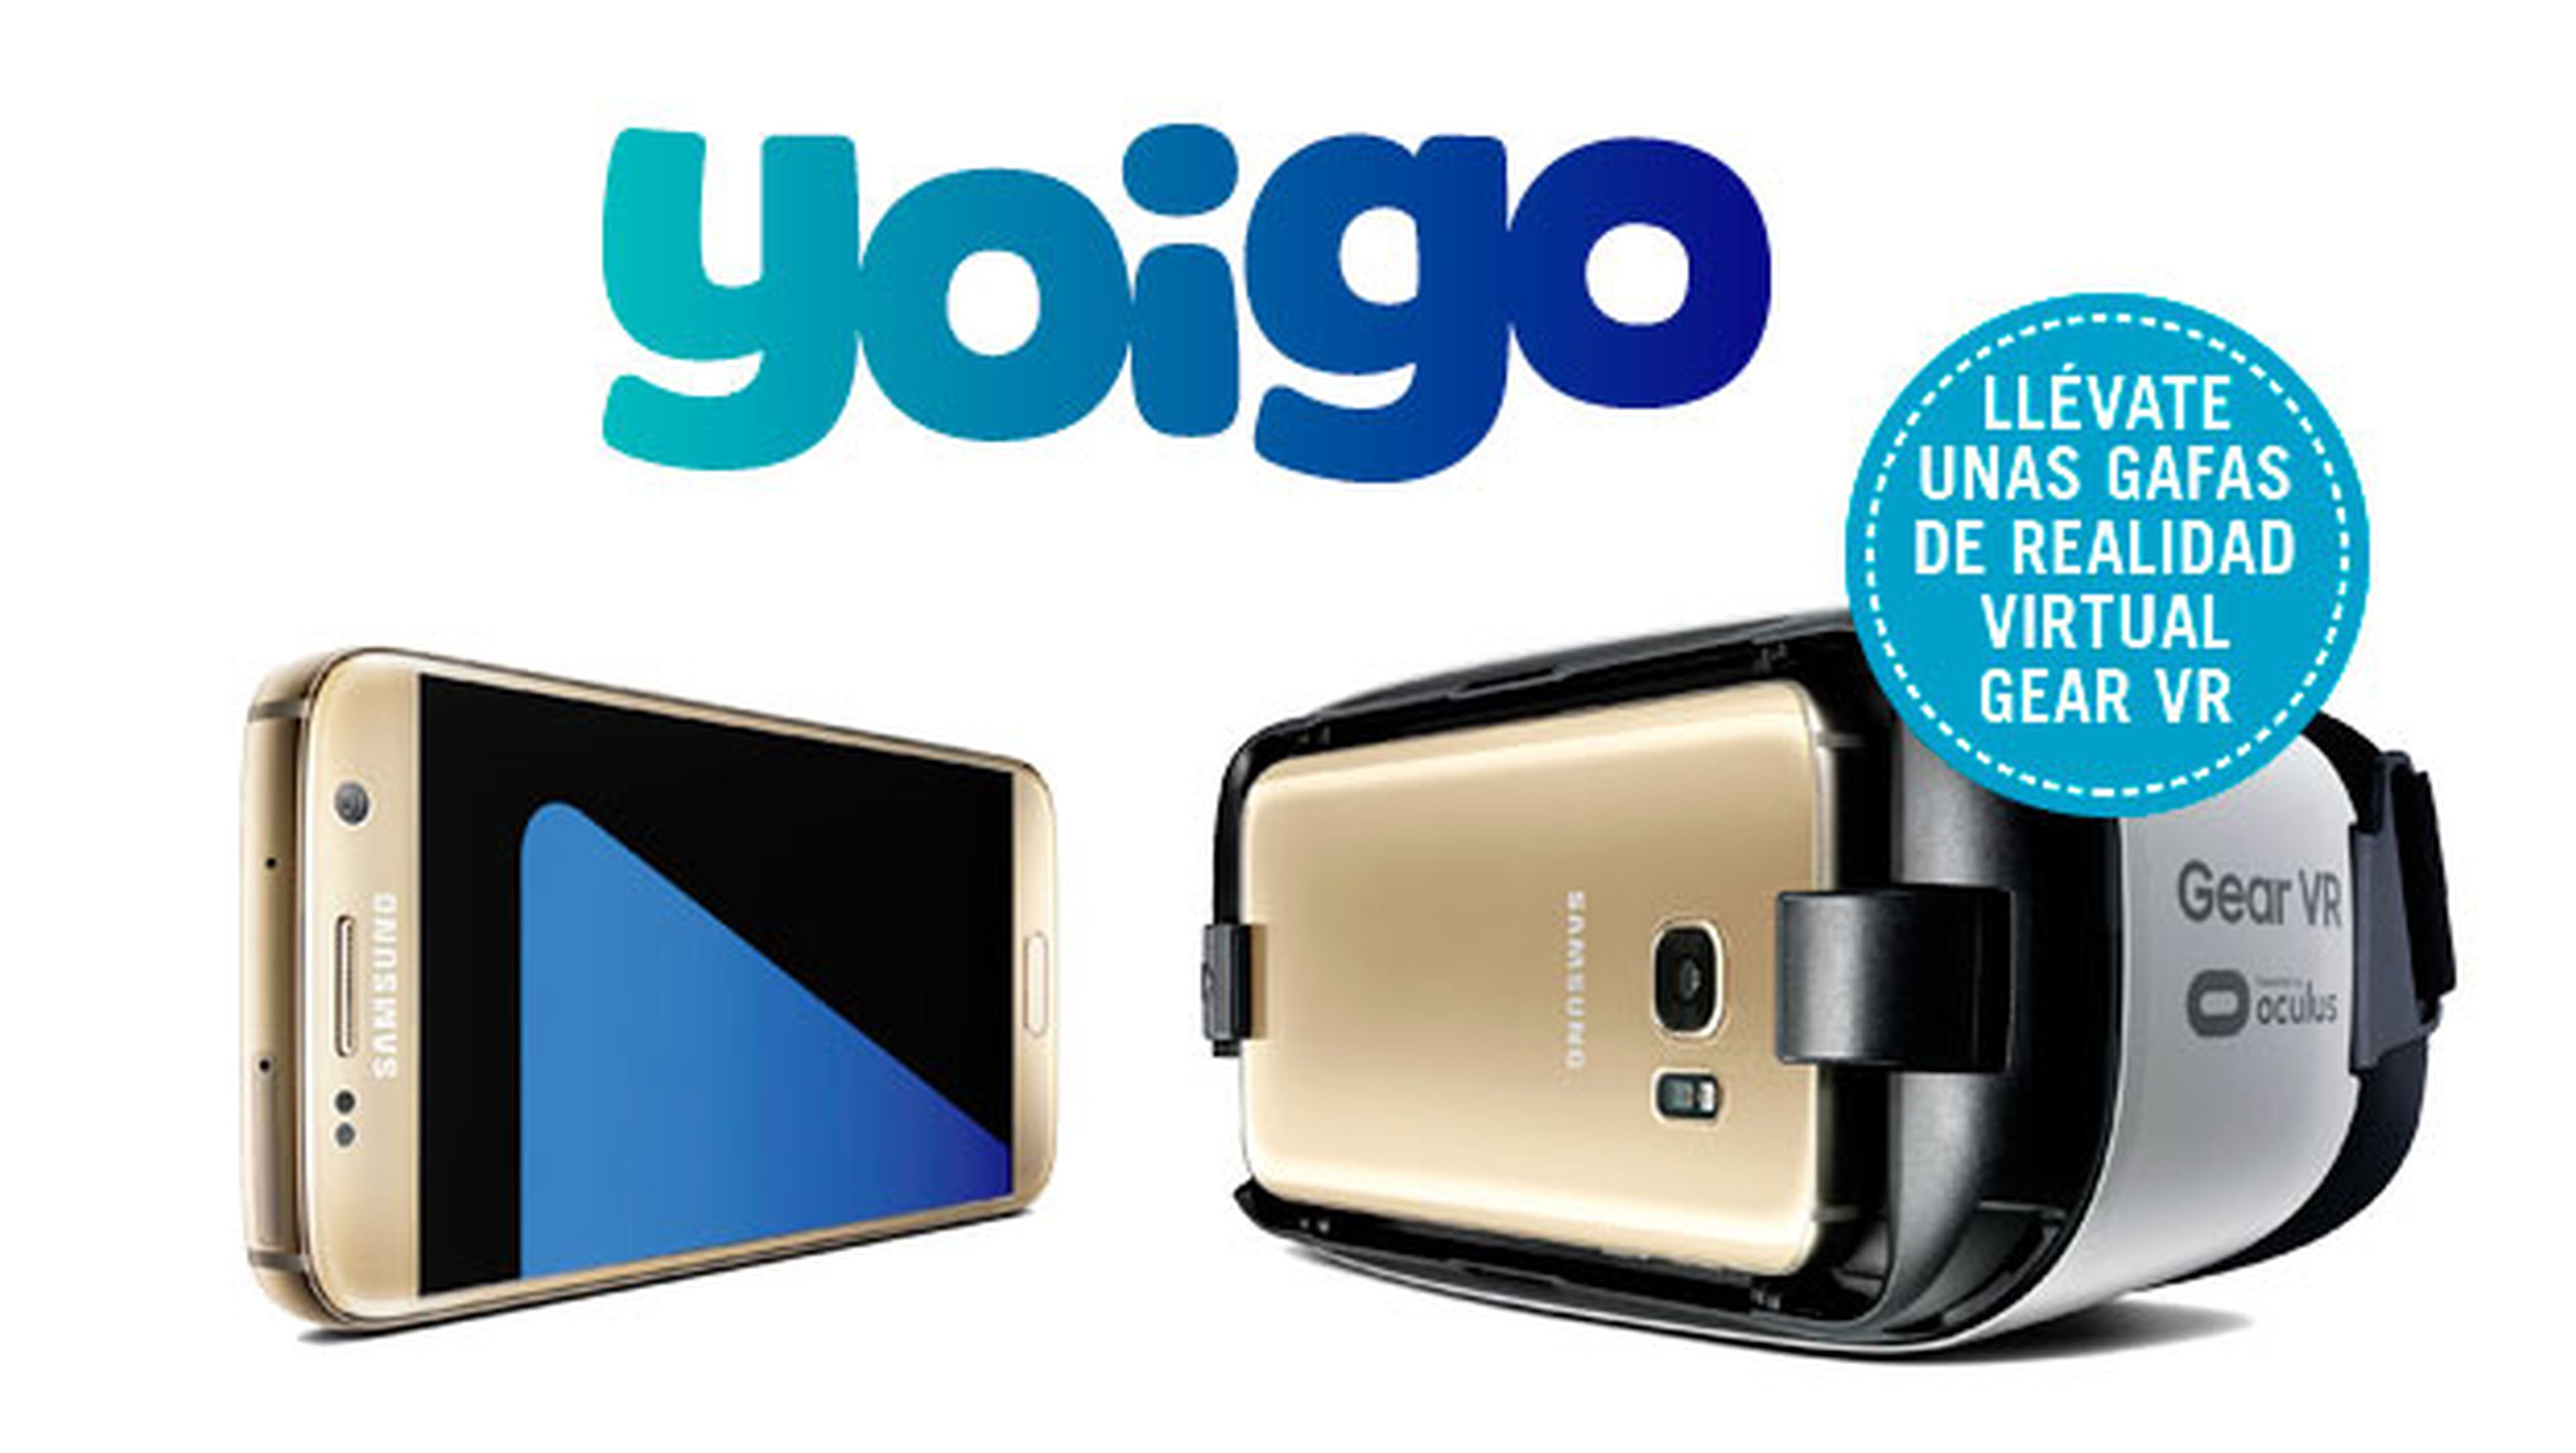 Samsung Galaxy s7 Yoigo